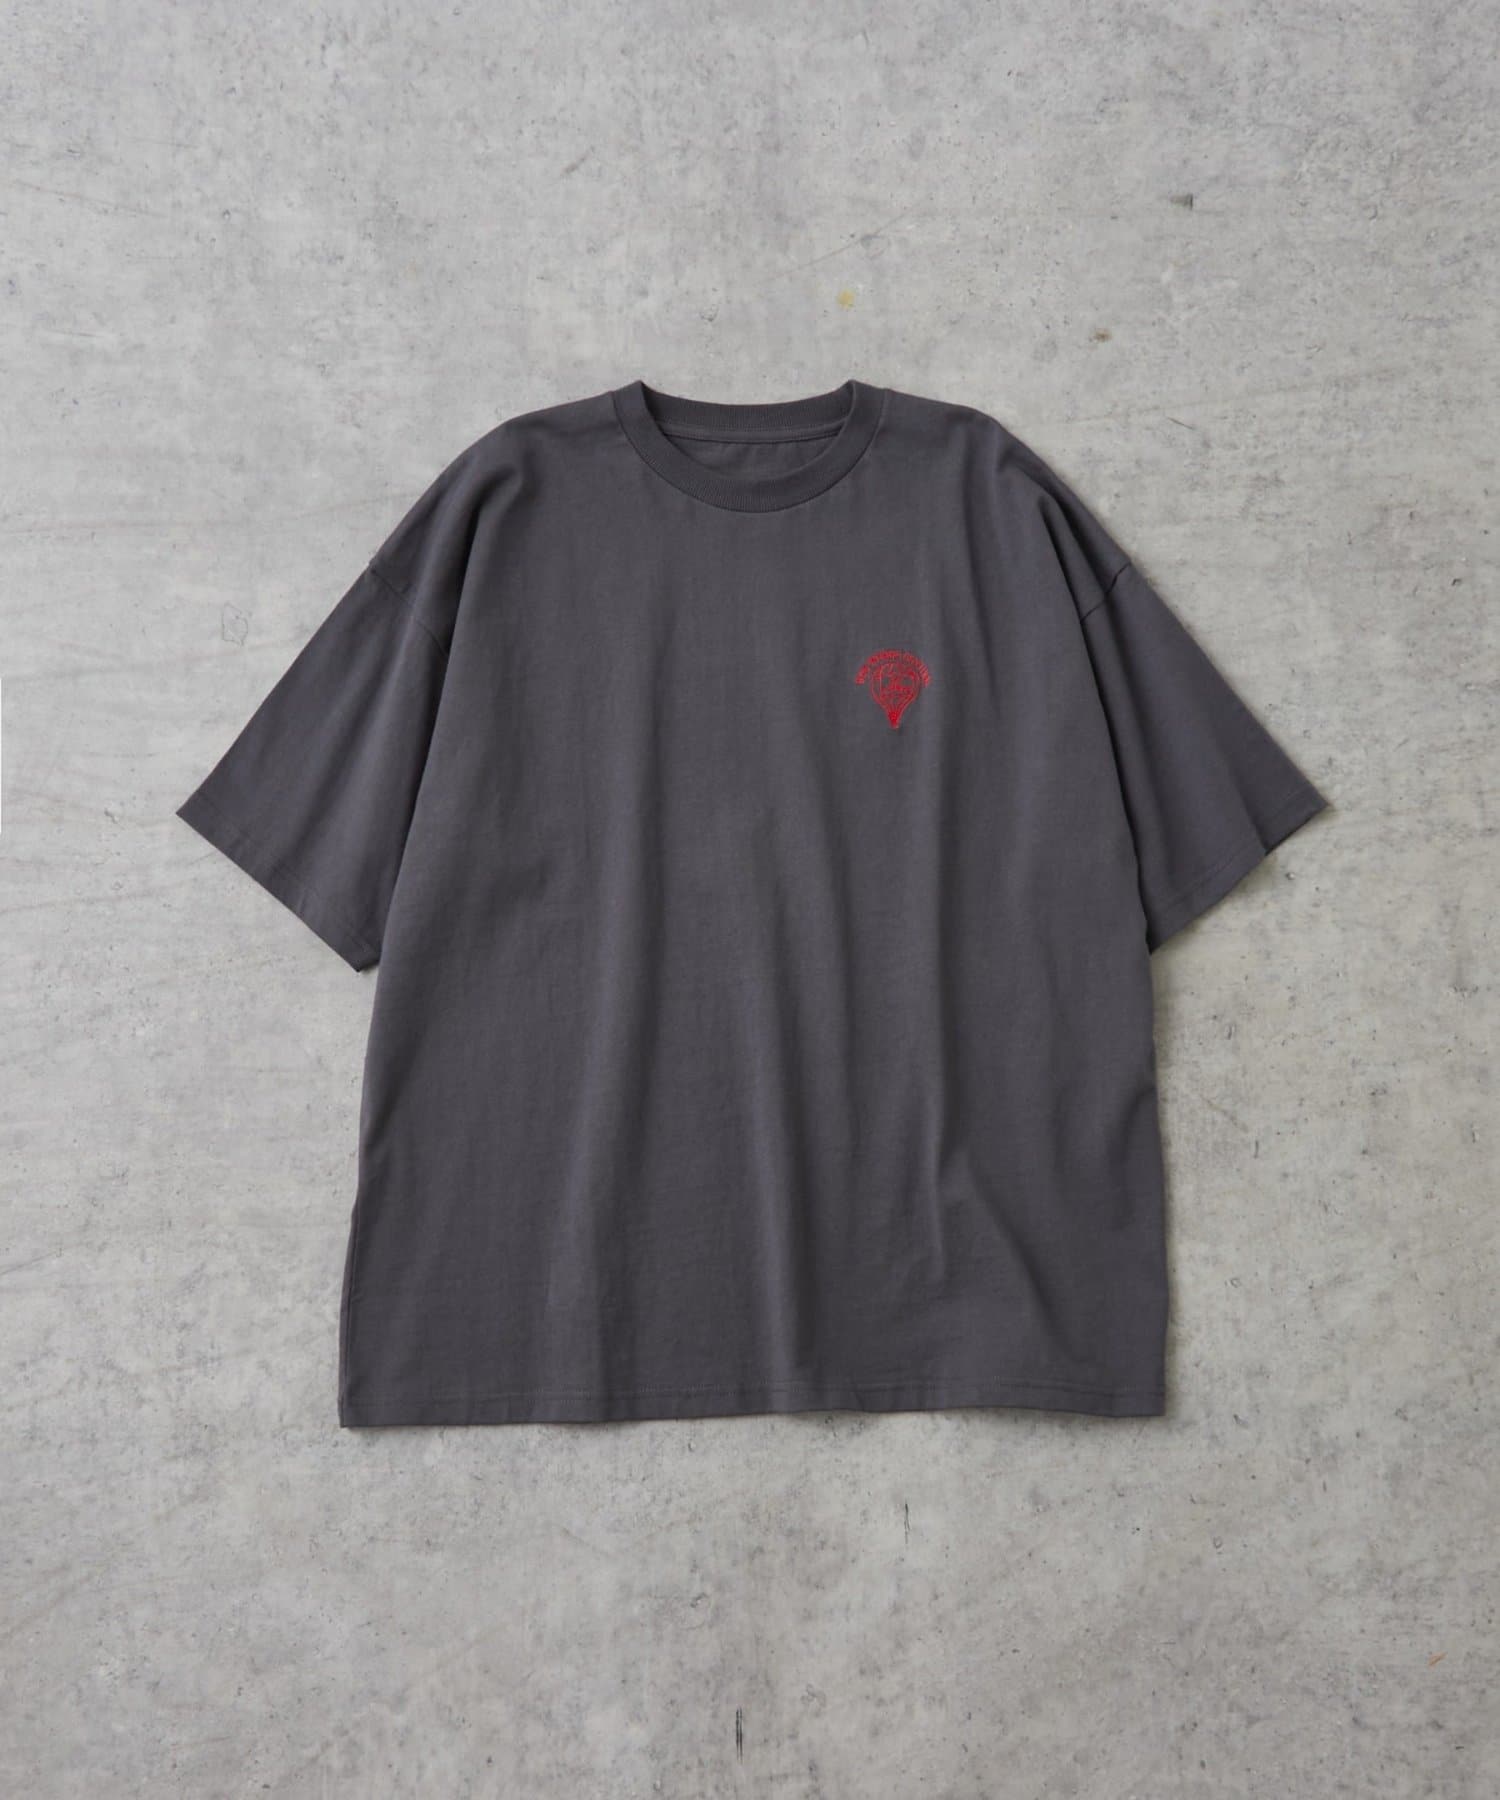 DISCOAT(ディスコート) ワンポイント刺繍半袖Tシャツ